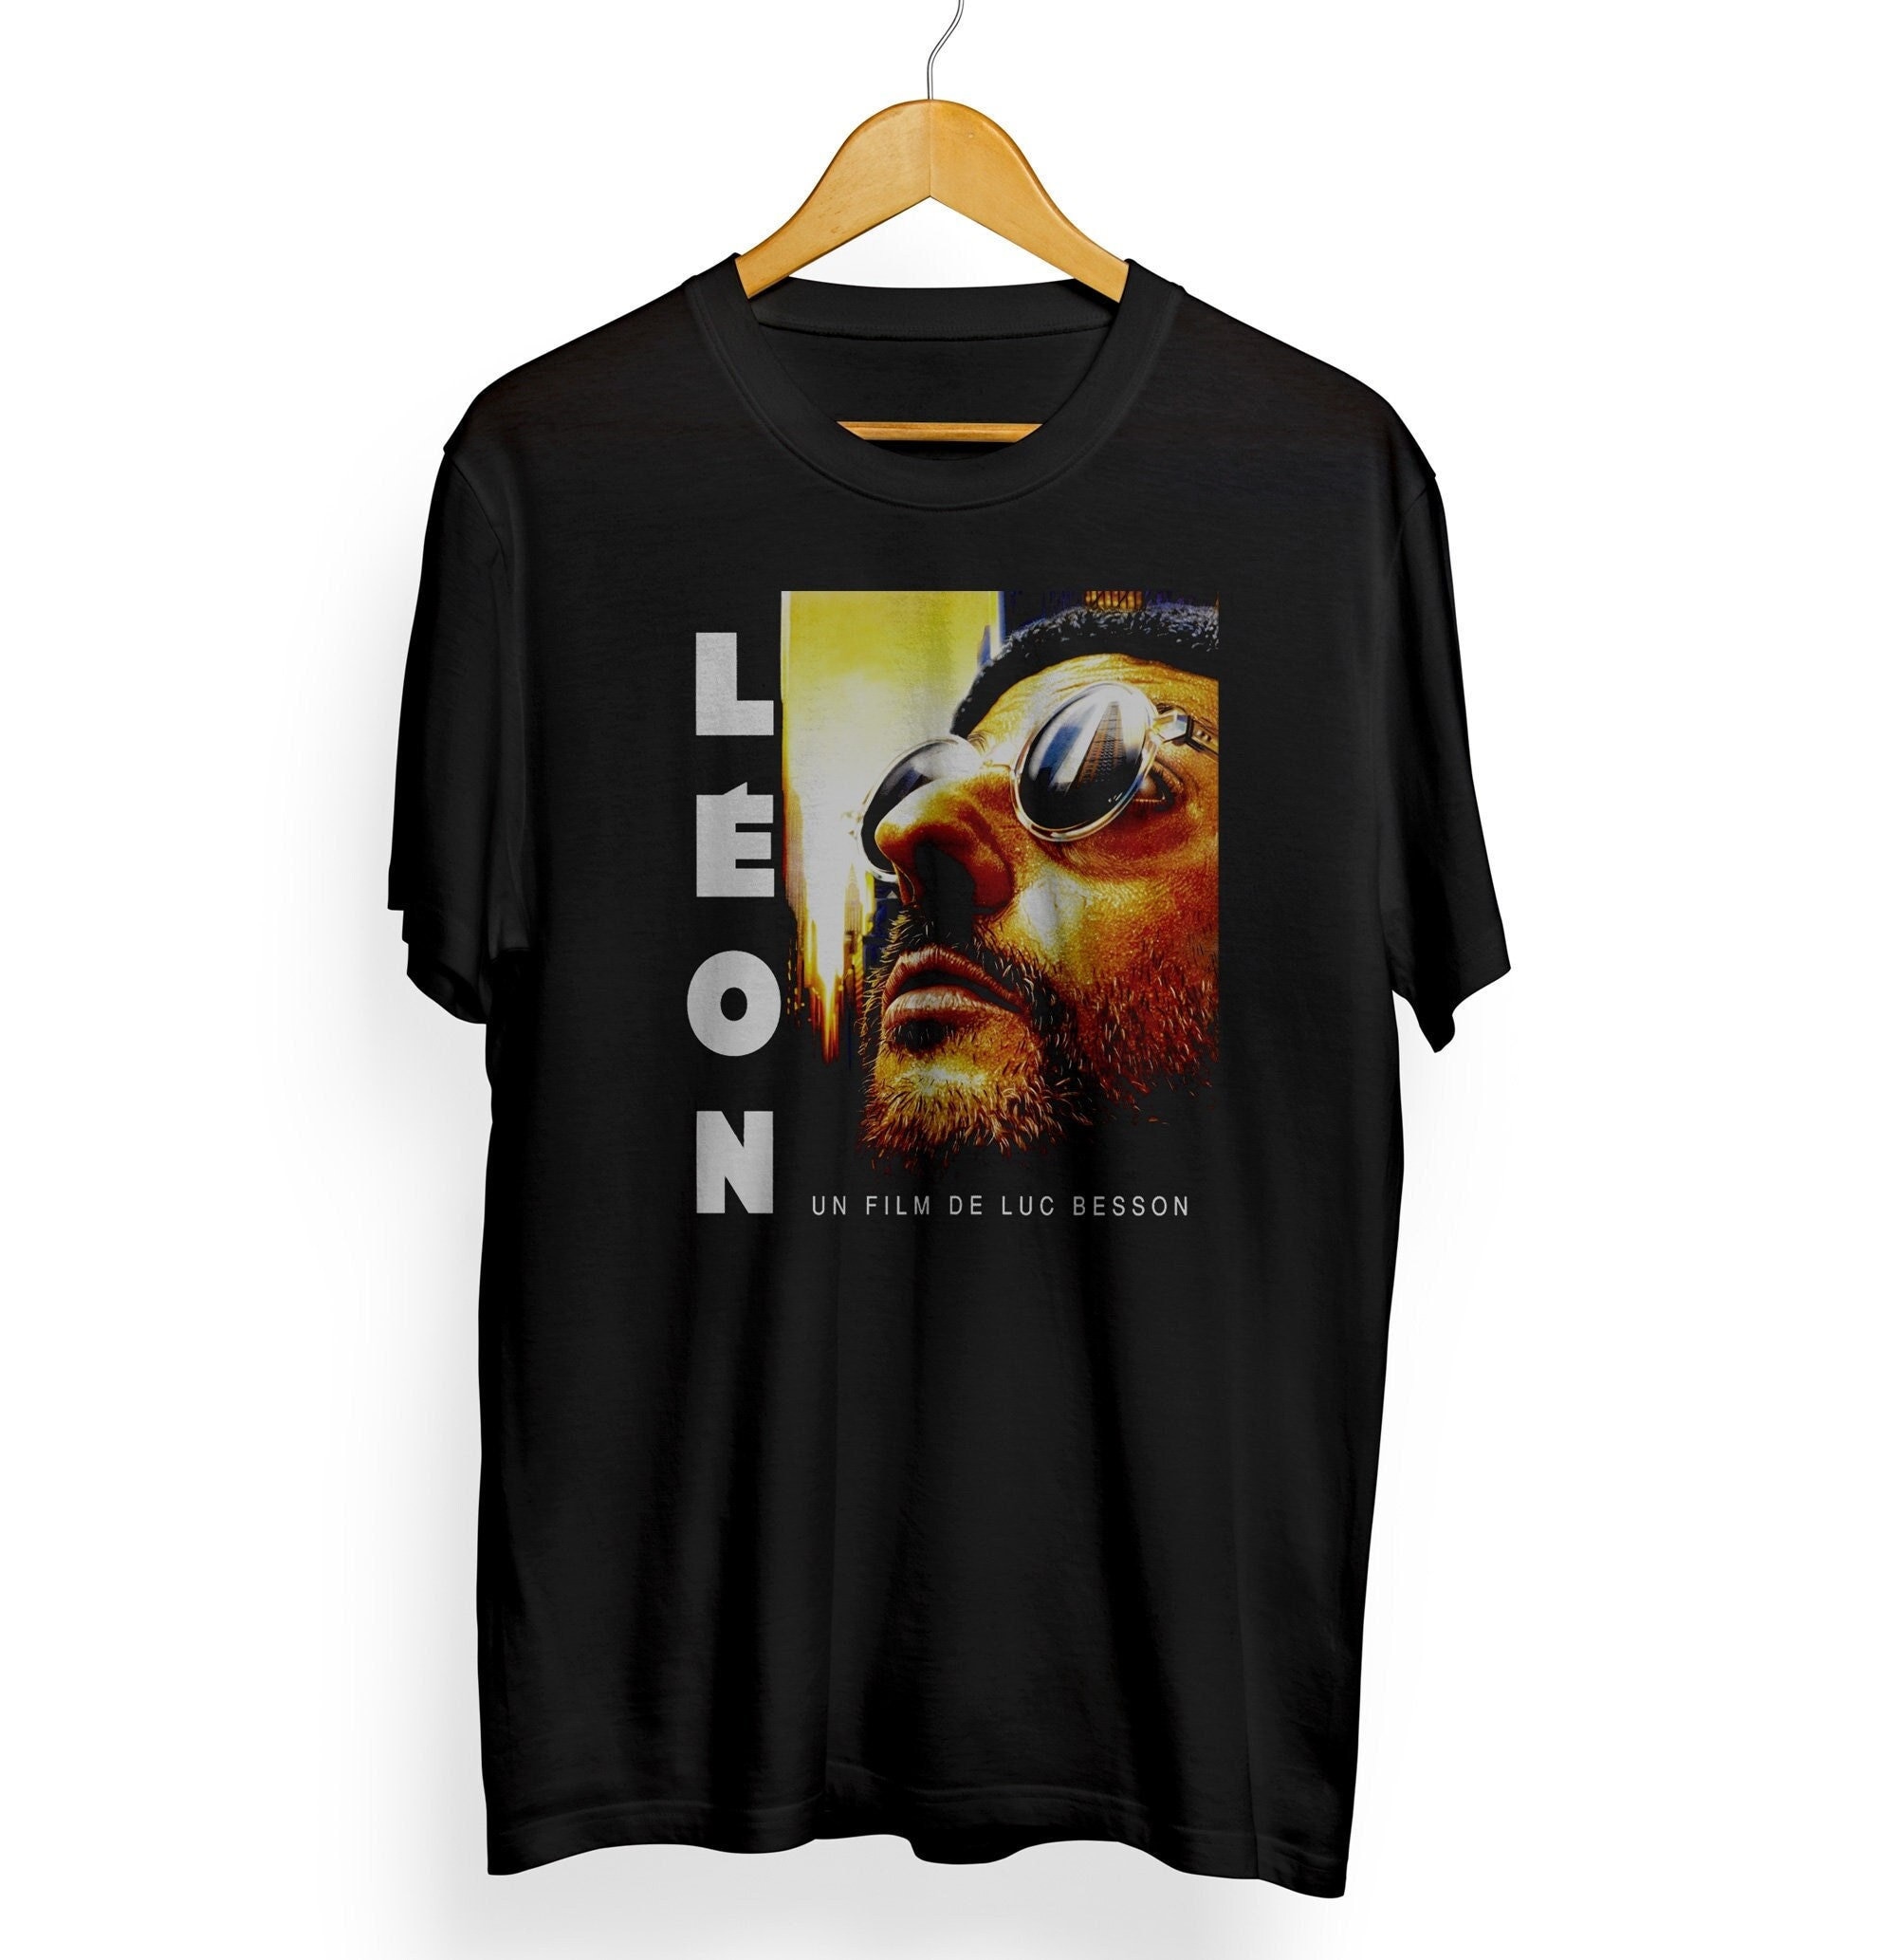 Leon The Professional T-shirt - Leon Shirt - The Professional Shirt